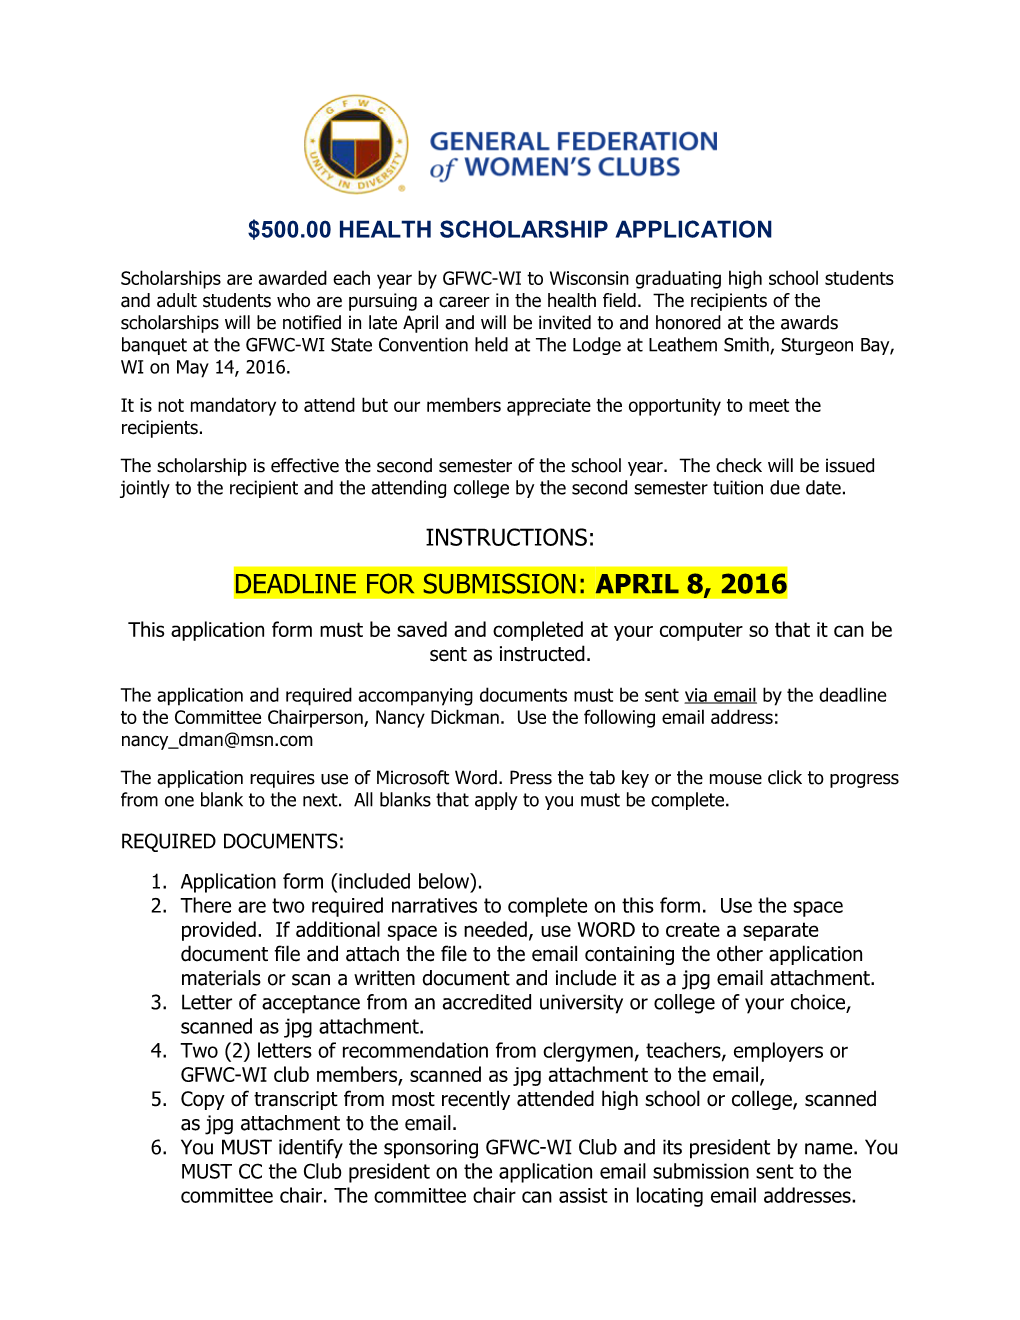 $500.00 Health Scholarship Application